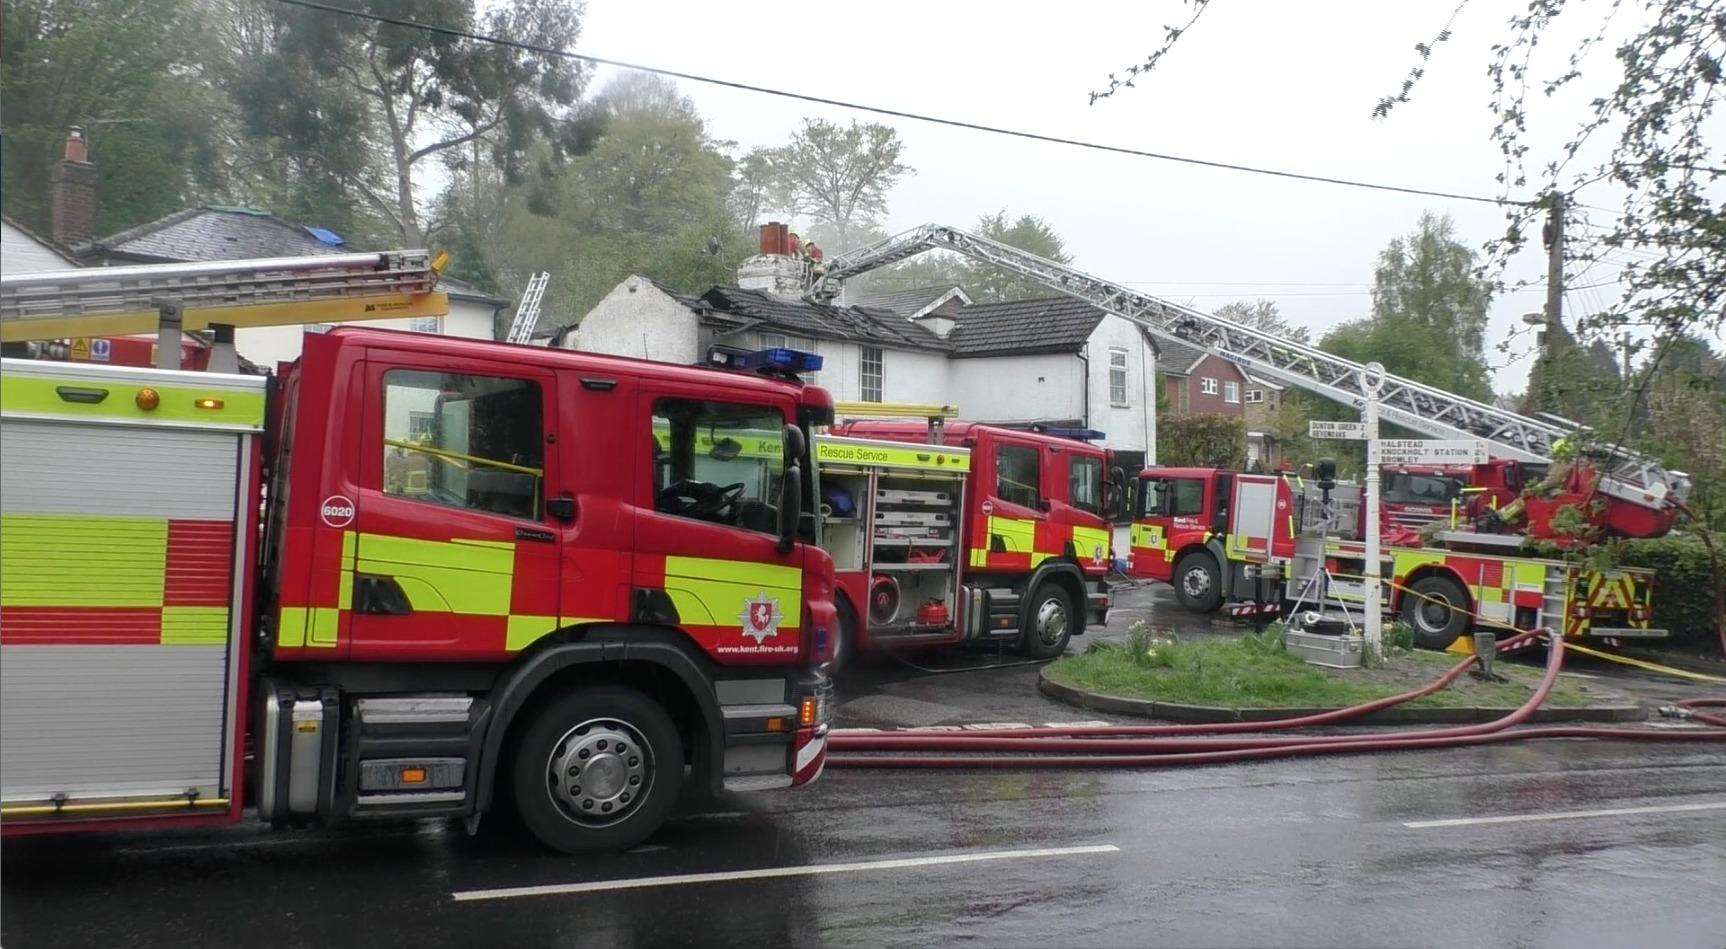 Crews at the scene of the fire in Harrow Road, Knockholt, near Sevenoaks